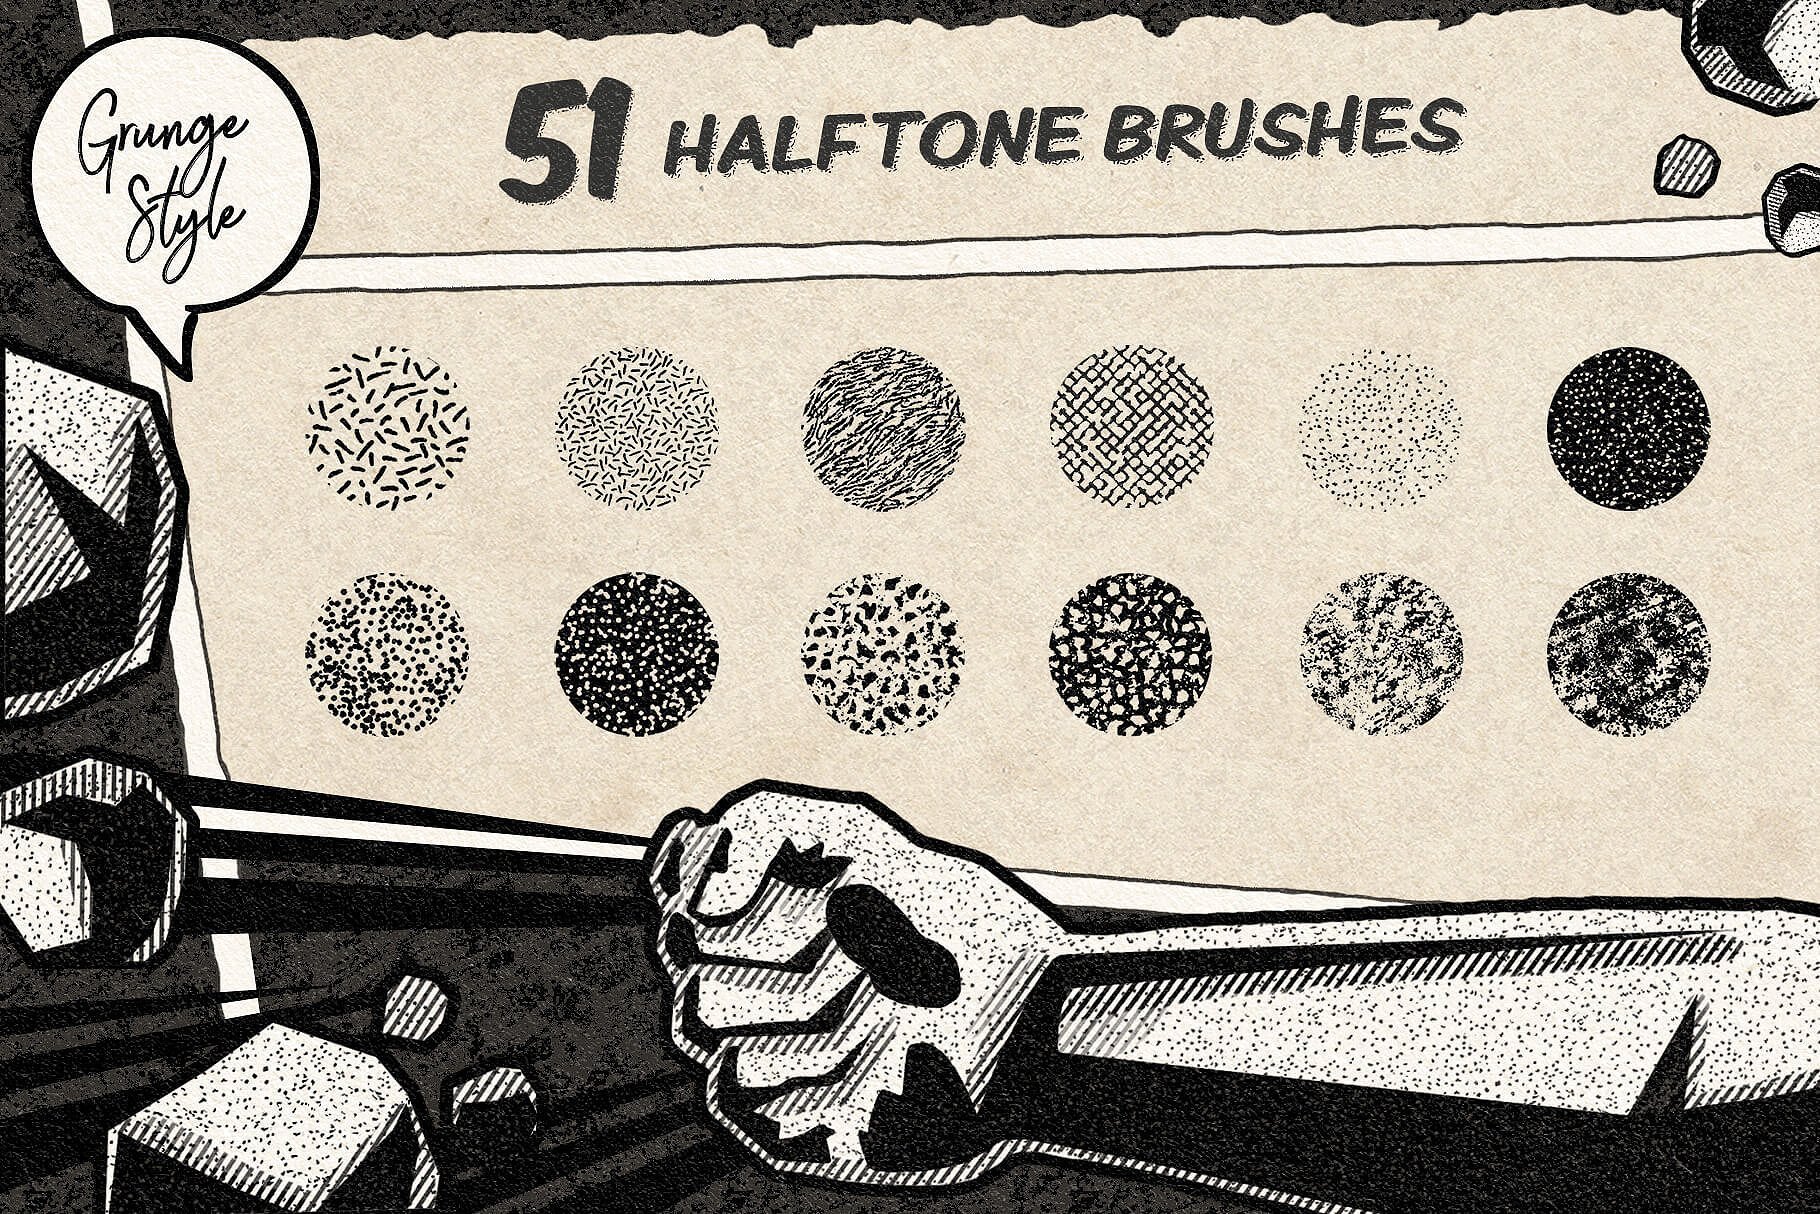 Vintage Comic Procreate Brushes